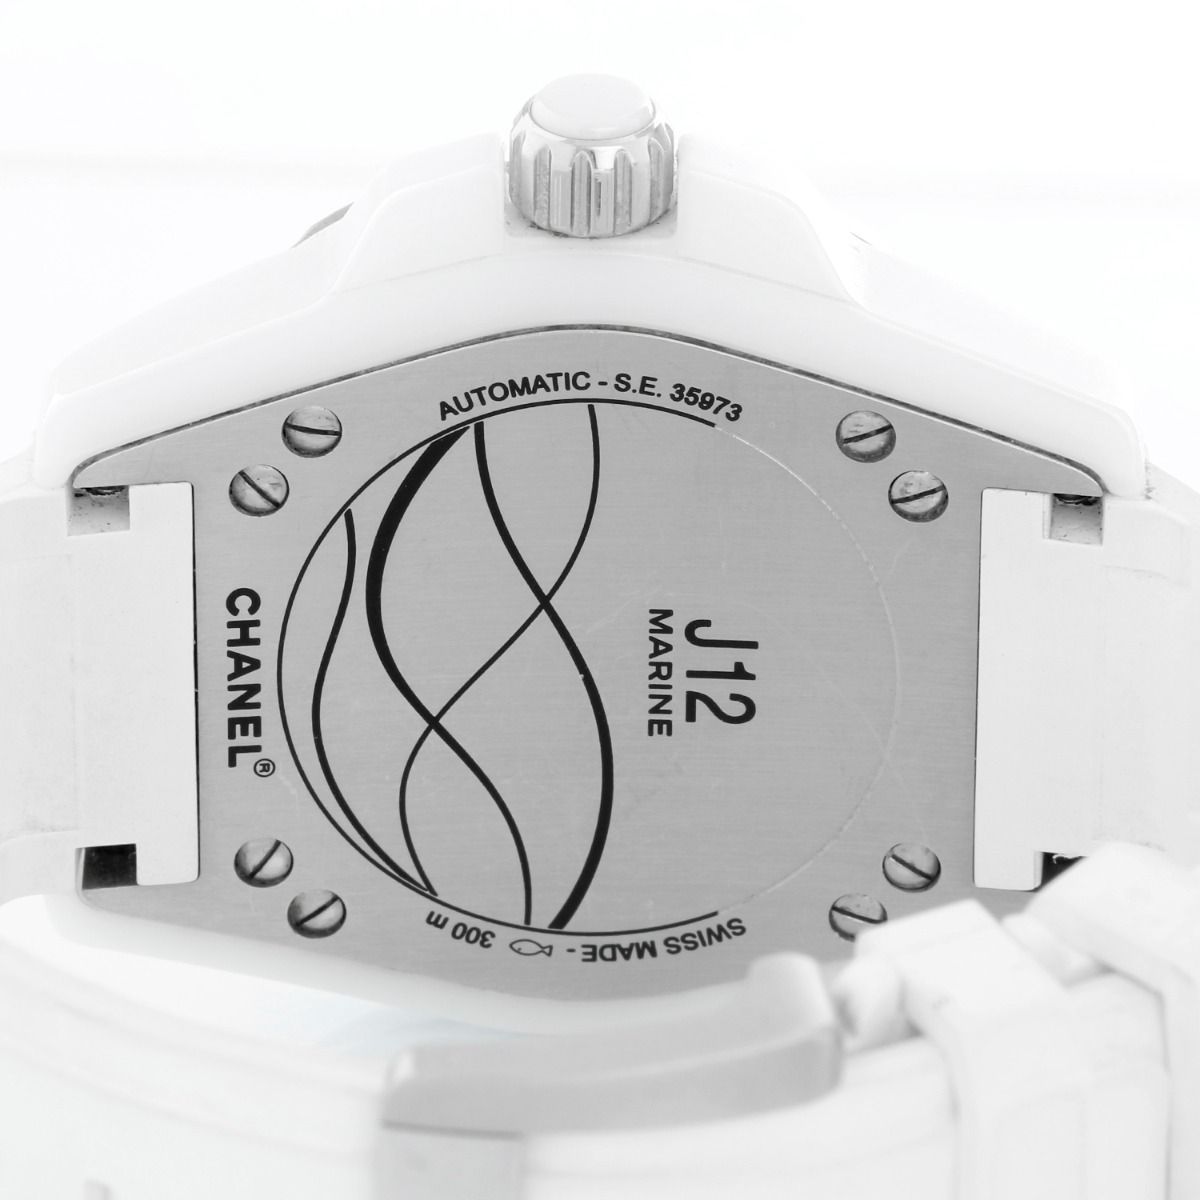 Chanel J12 White Ceramic Ladies Watch H0968